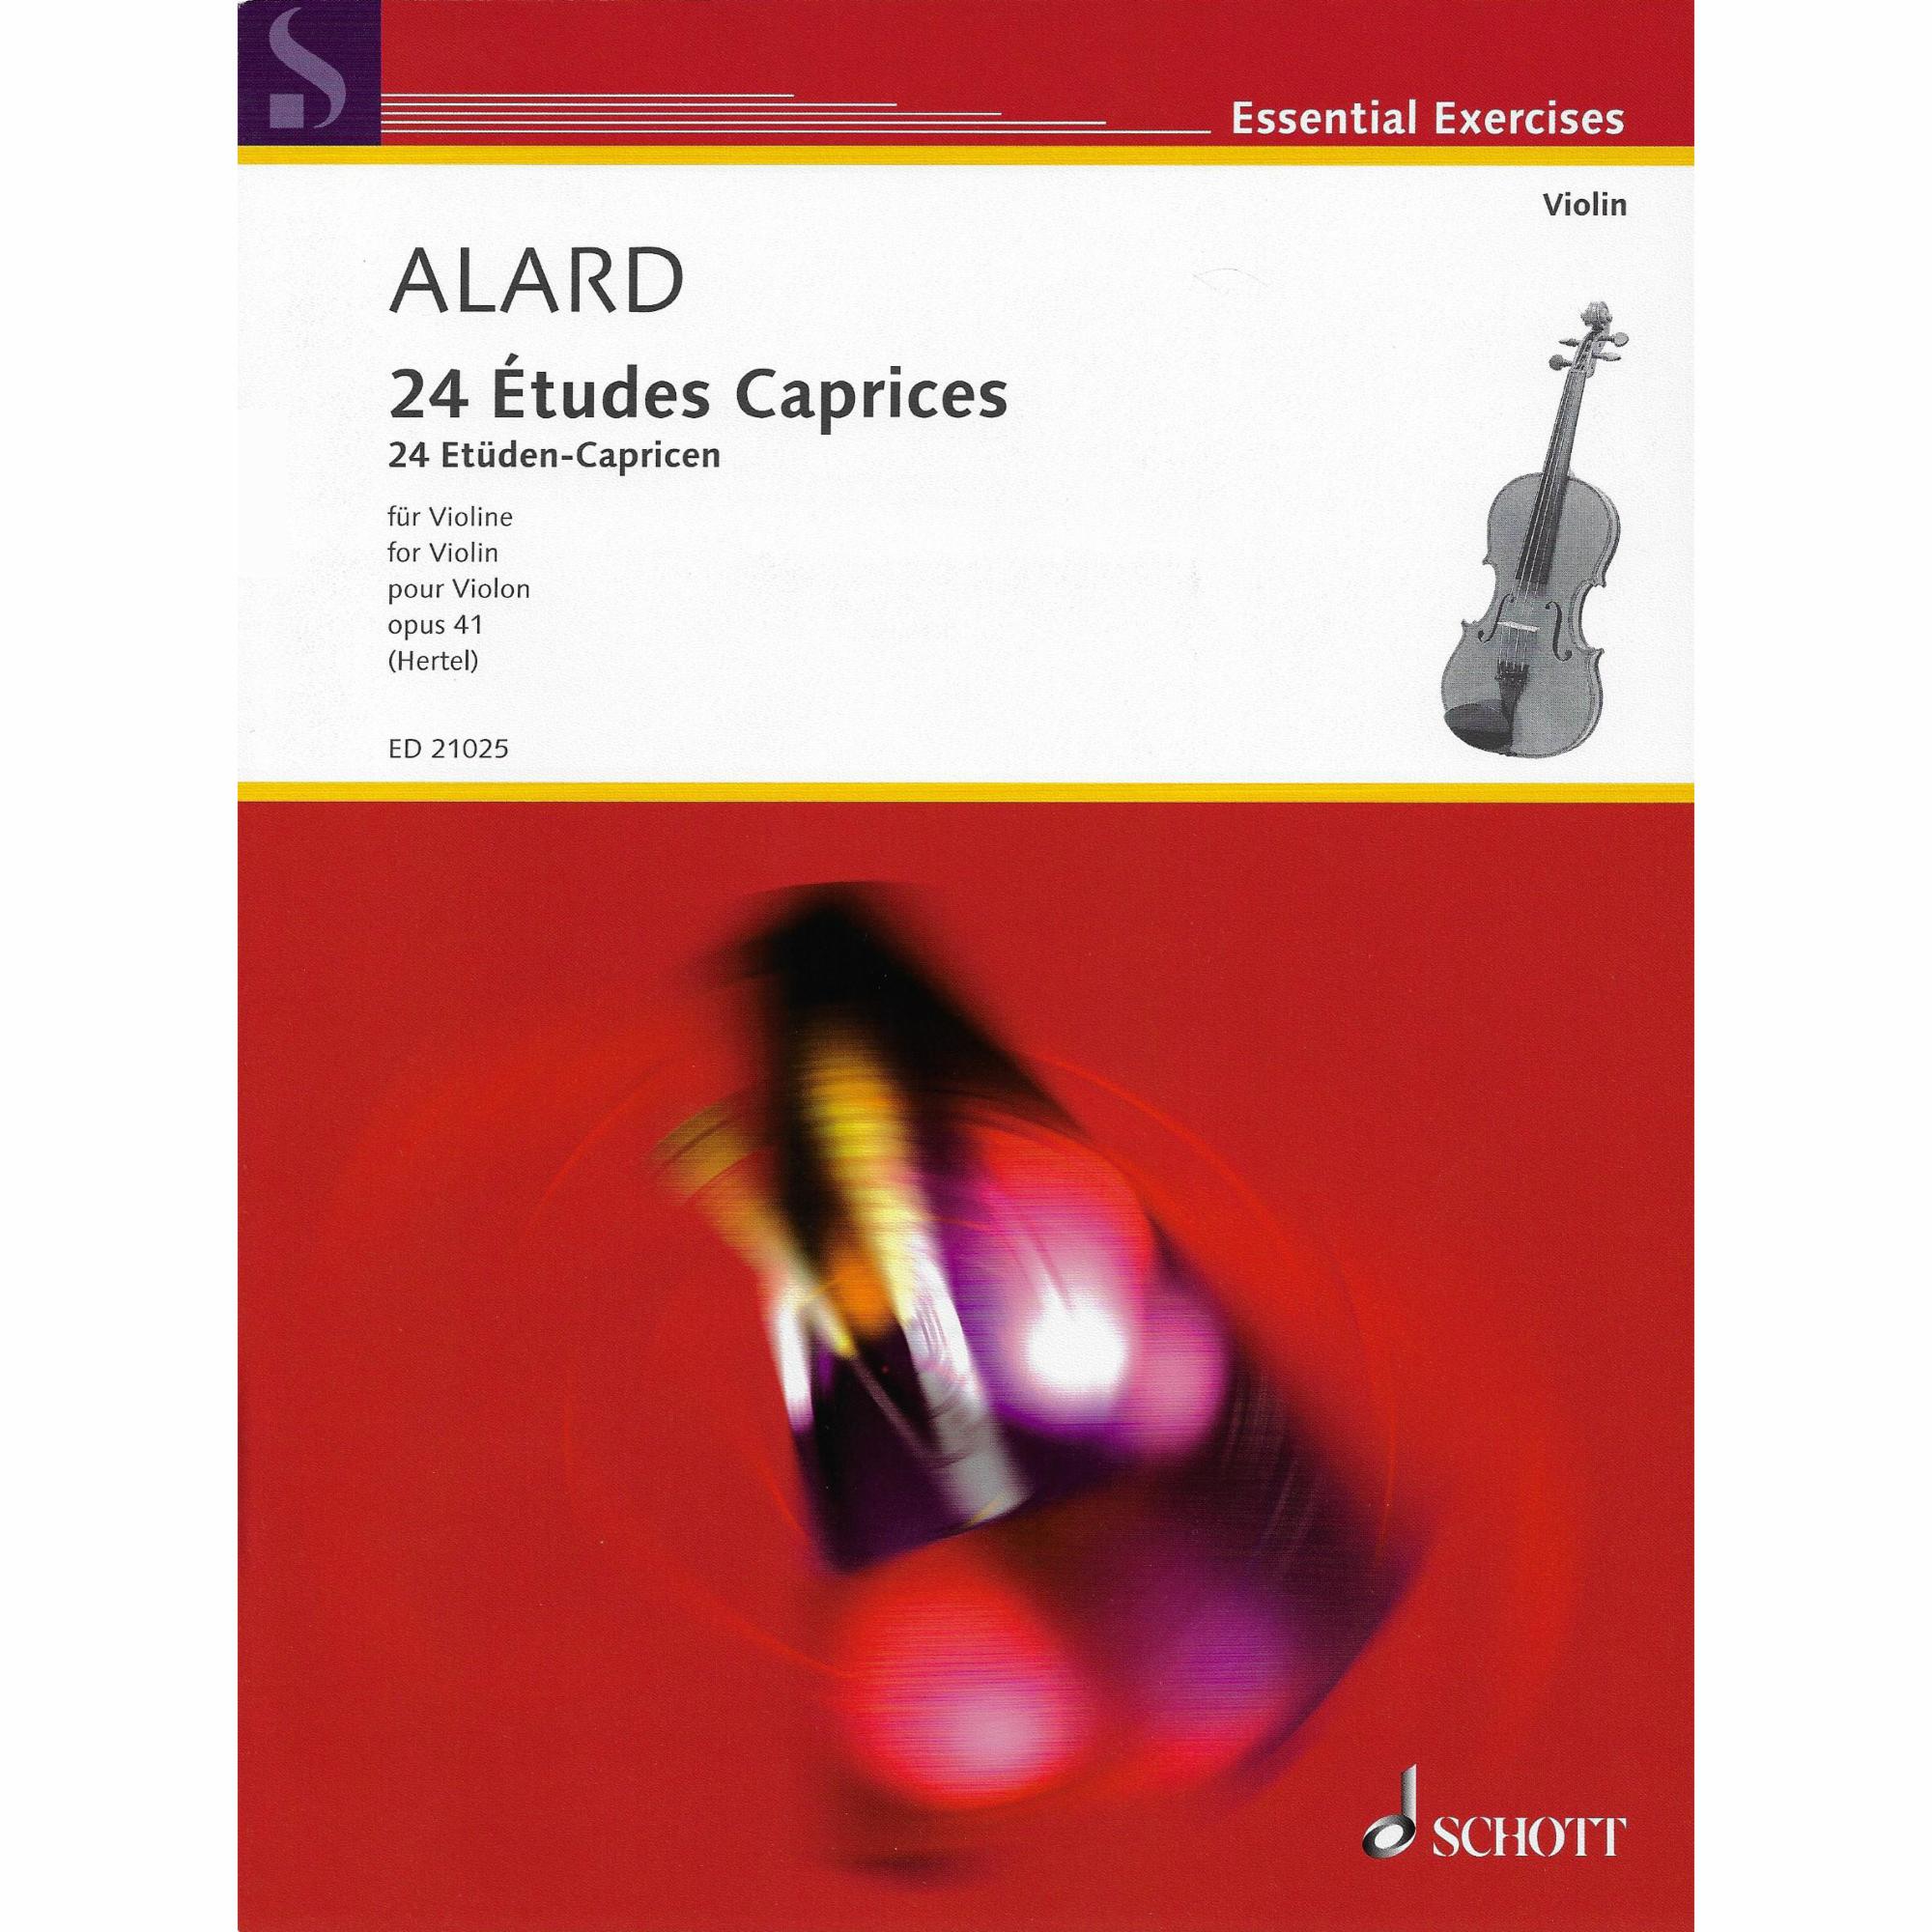 Alard -- 24 Etudes Caprices, Op. 41 for Violin